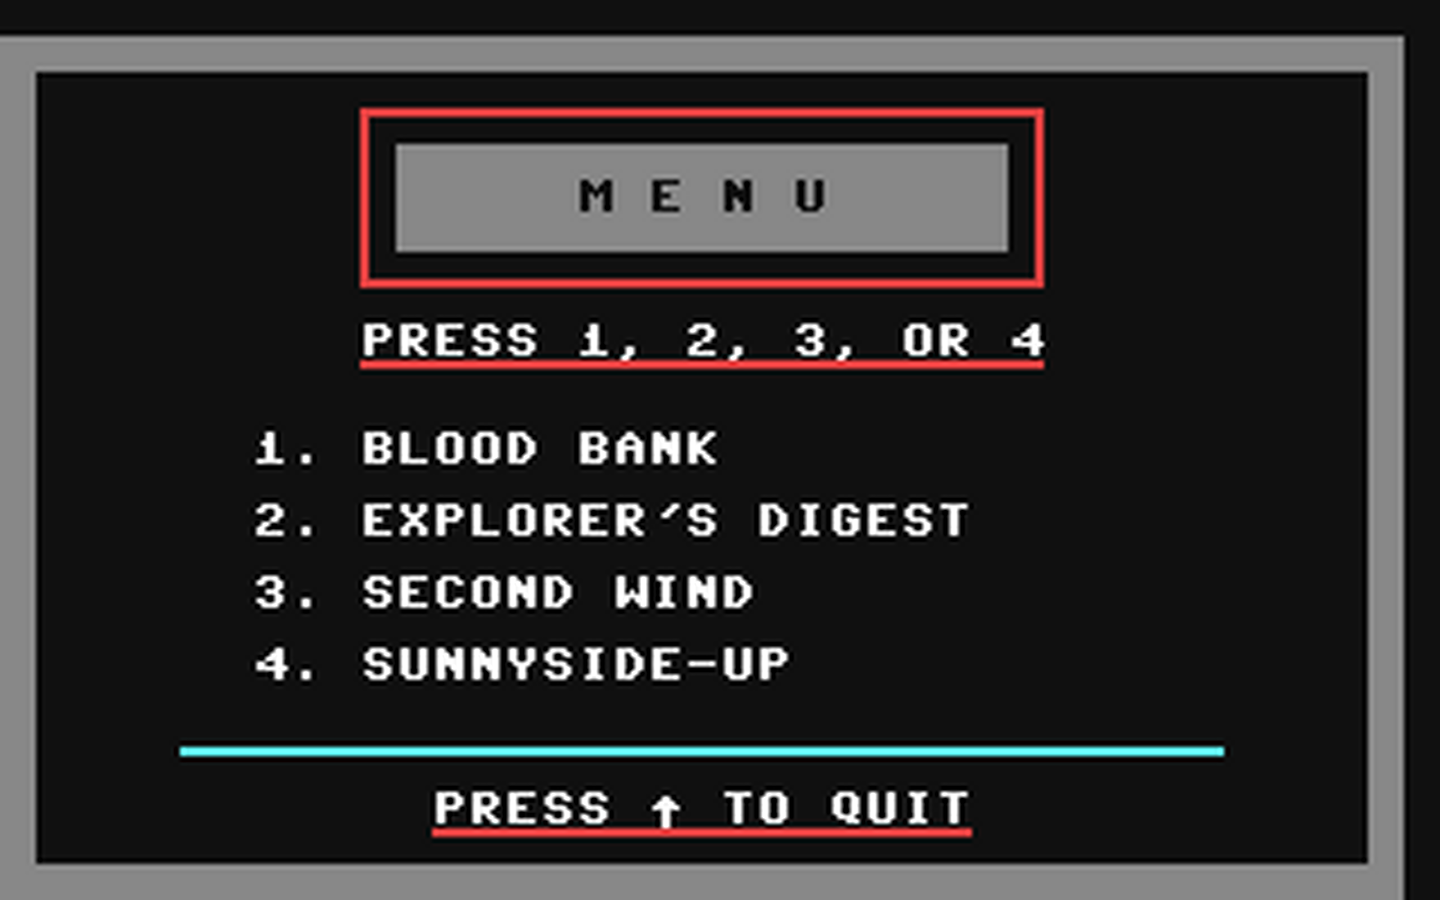 C64 GameBase Body_Systems Micro-Ed,_Inc. 1984